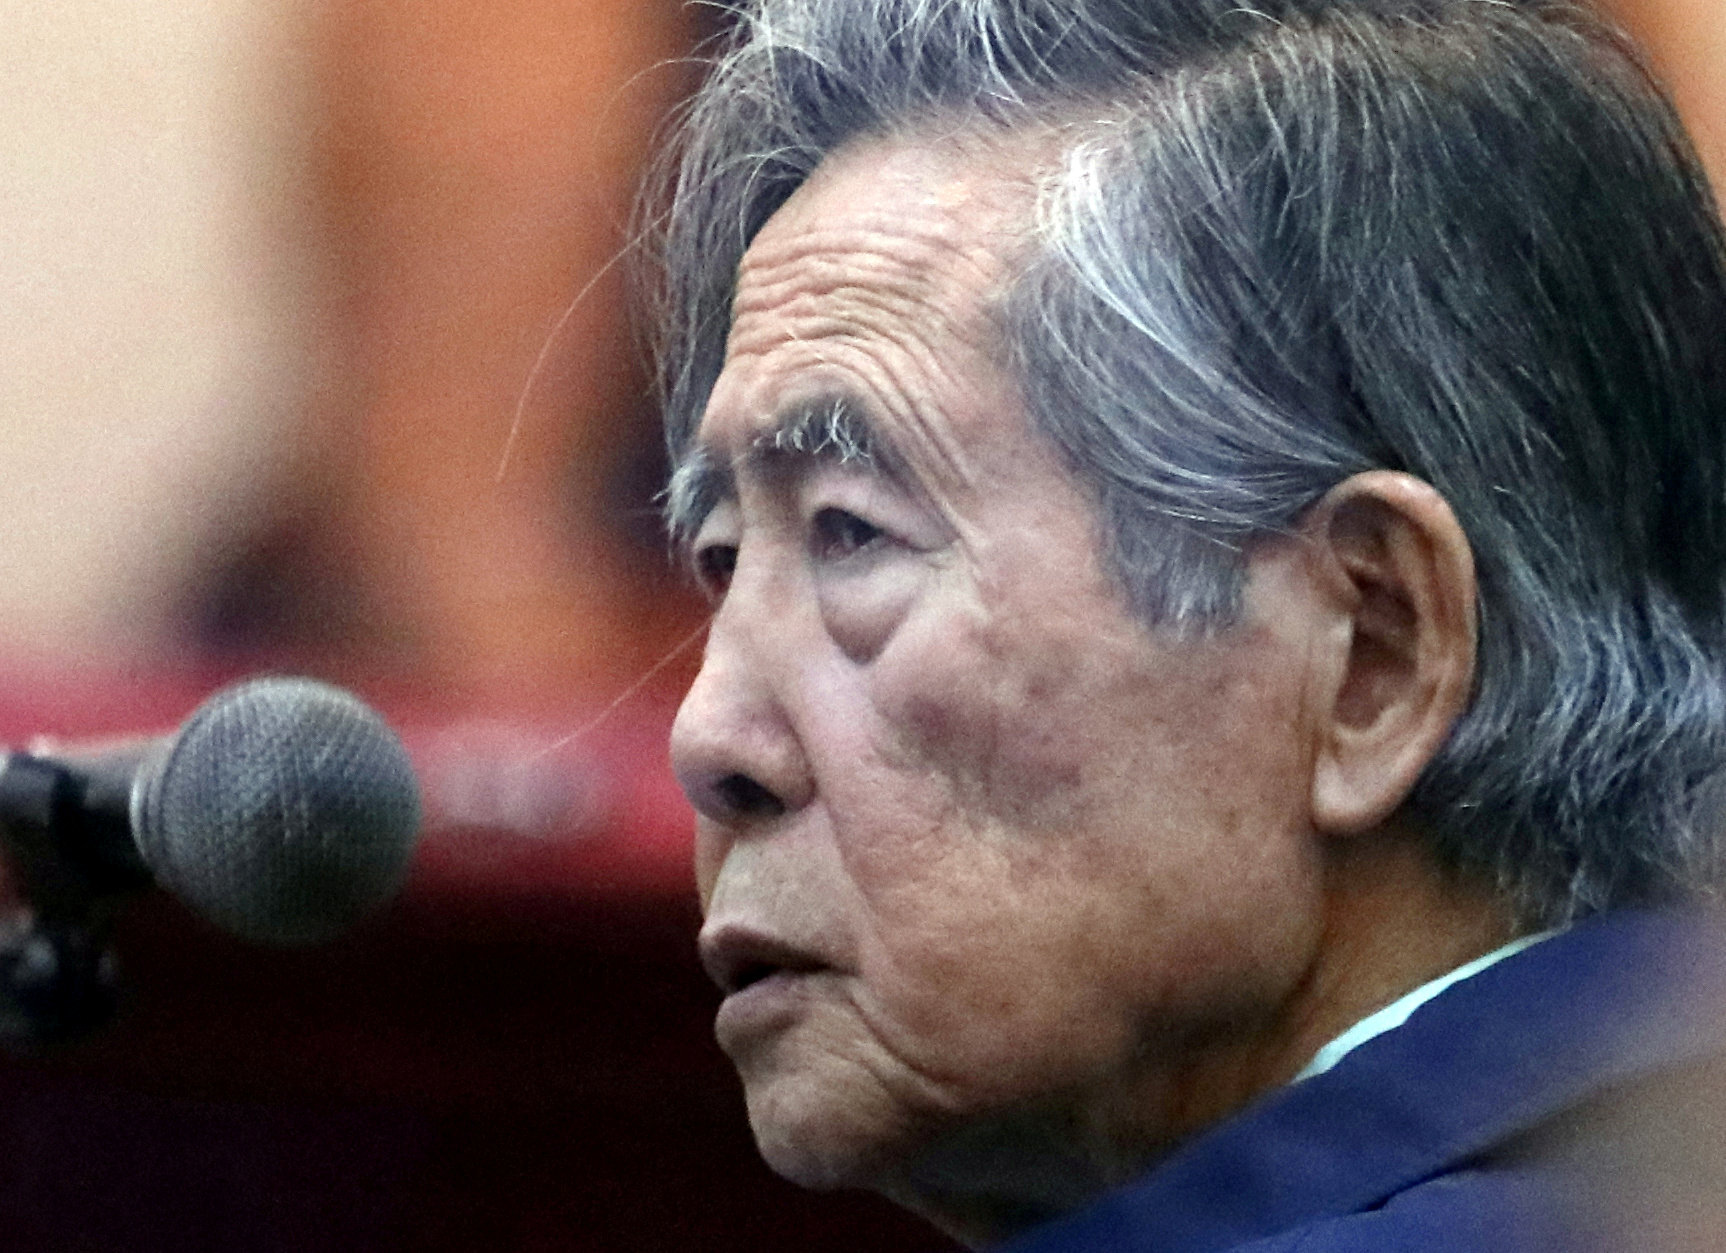 Expresidente peruano Fujimori es hospitalizado por hipertensión